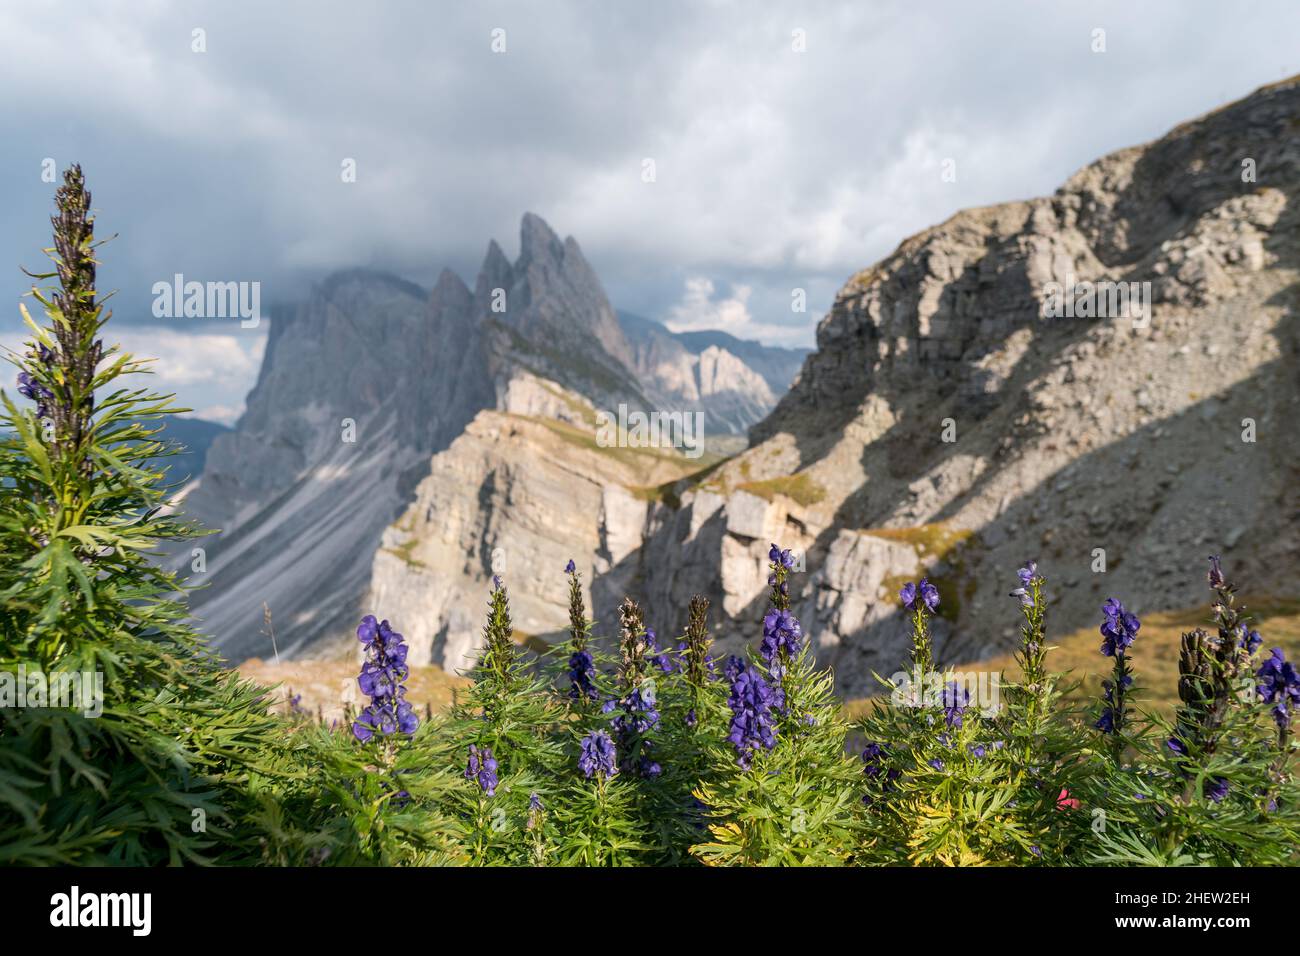 Monkshood flower in bloom, closeup, Seceda mountain peak. Trentino Alto Adige, Dolomites Alps, South Tyrol, Italy, Europe Stock Photo